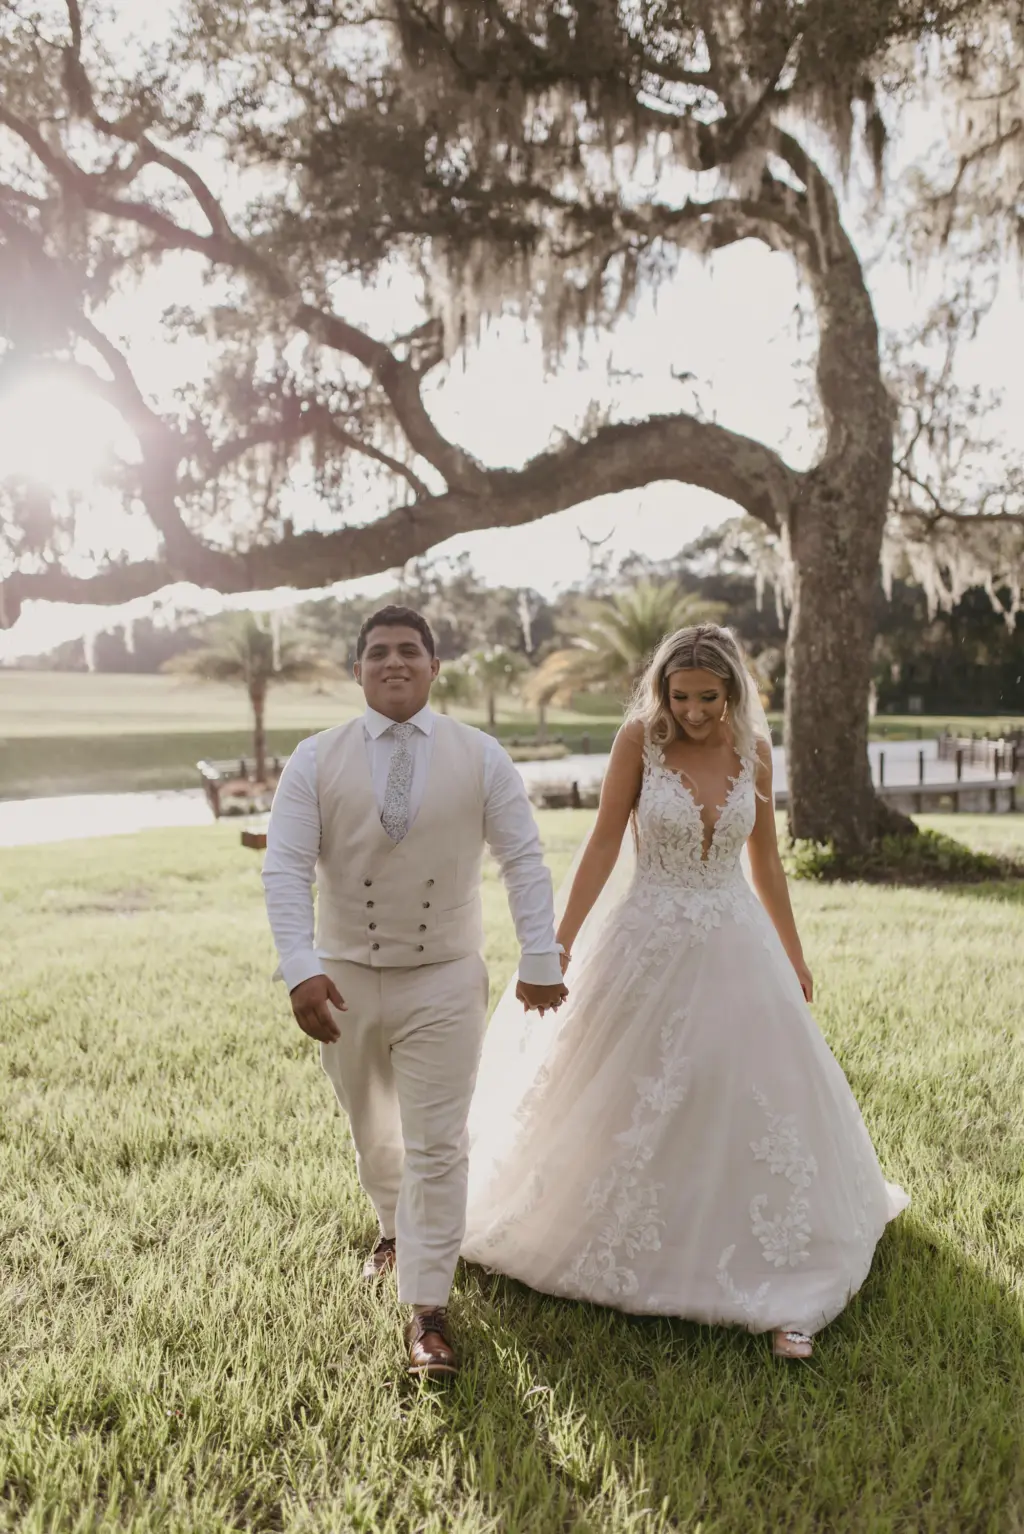 Bride and Groom Sunset Oak Tree Backdrop Wedding Portrait | Tampa Bay Event Venue Simpson Lakes | Planner EventFull Weddings | Valentina Rose Photography